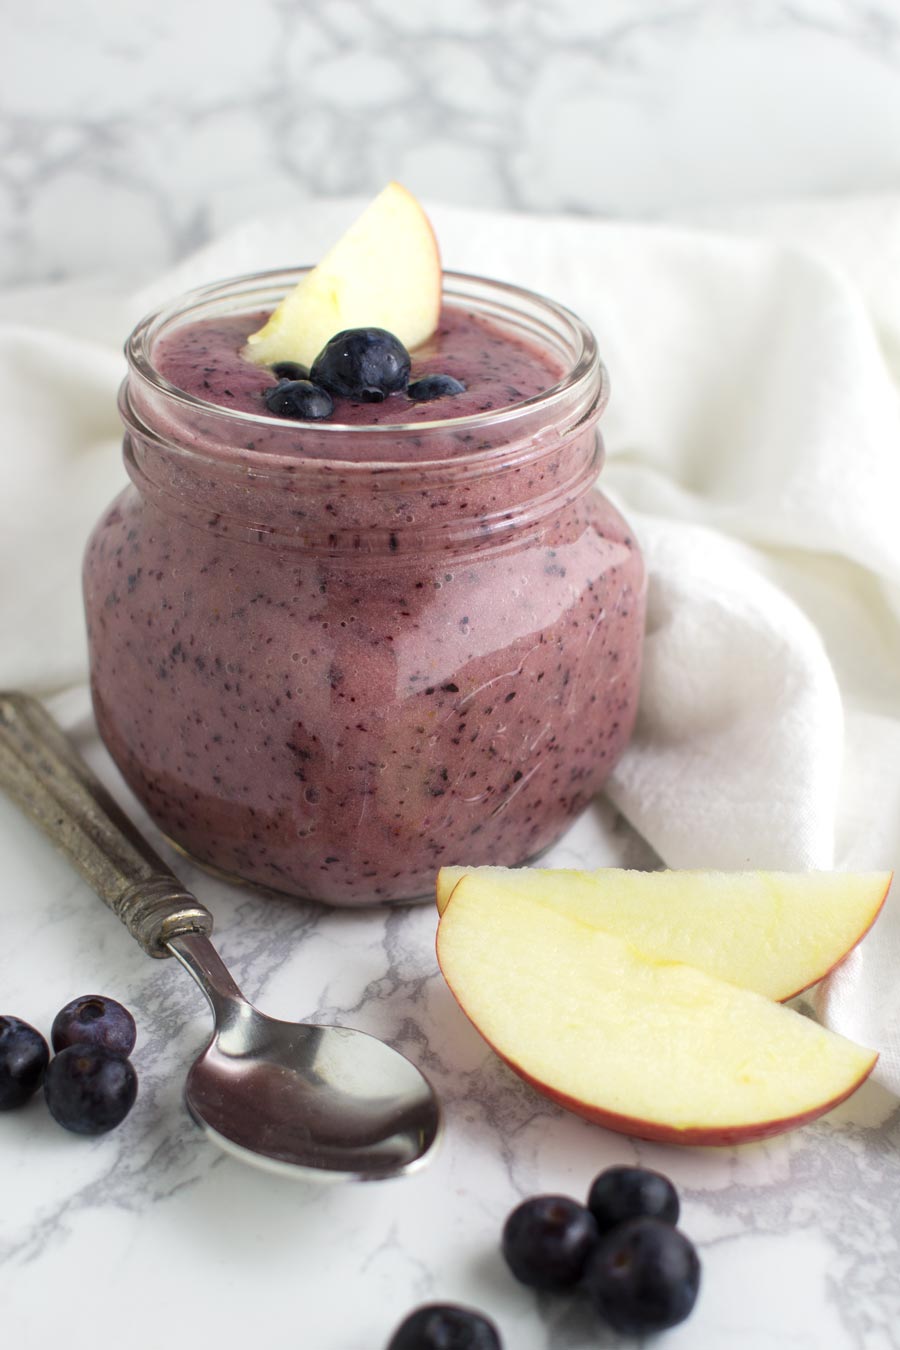 Blueberry Applesauce recipe from acleanplate.com #aip #paleo #autoimmuneprotocol